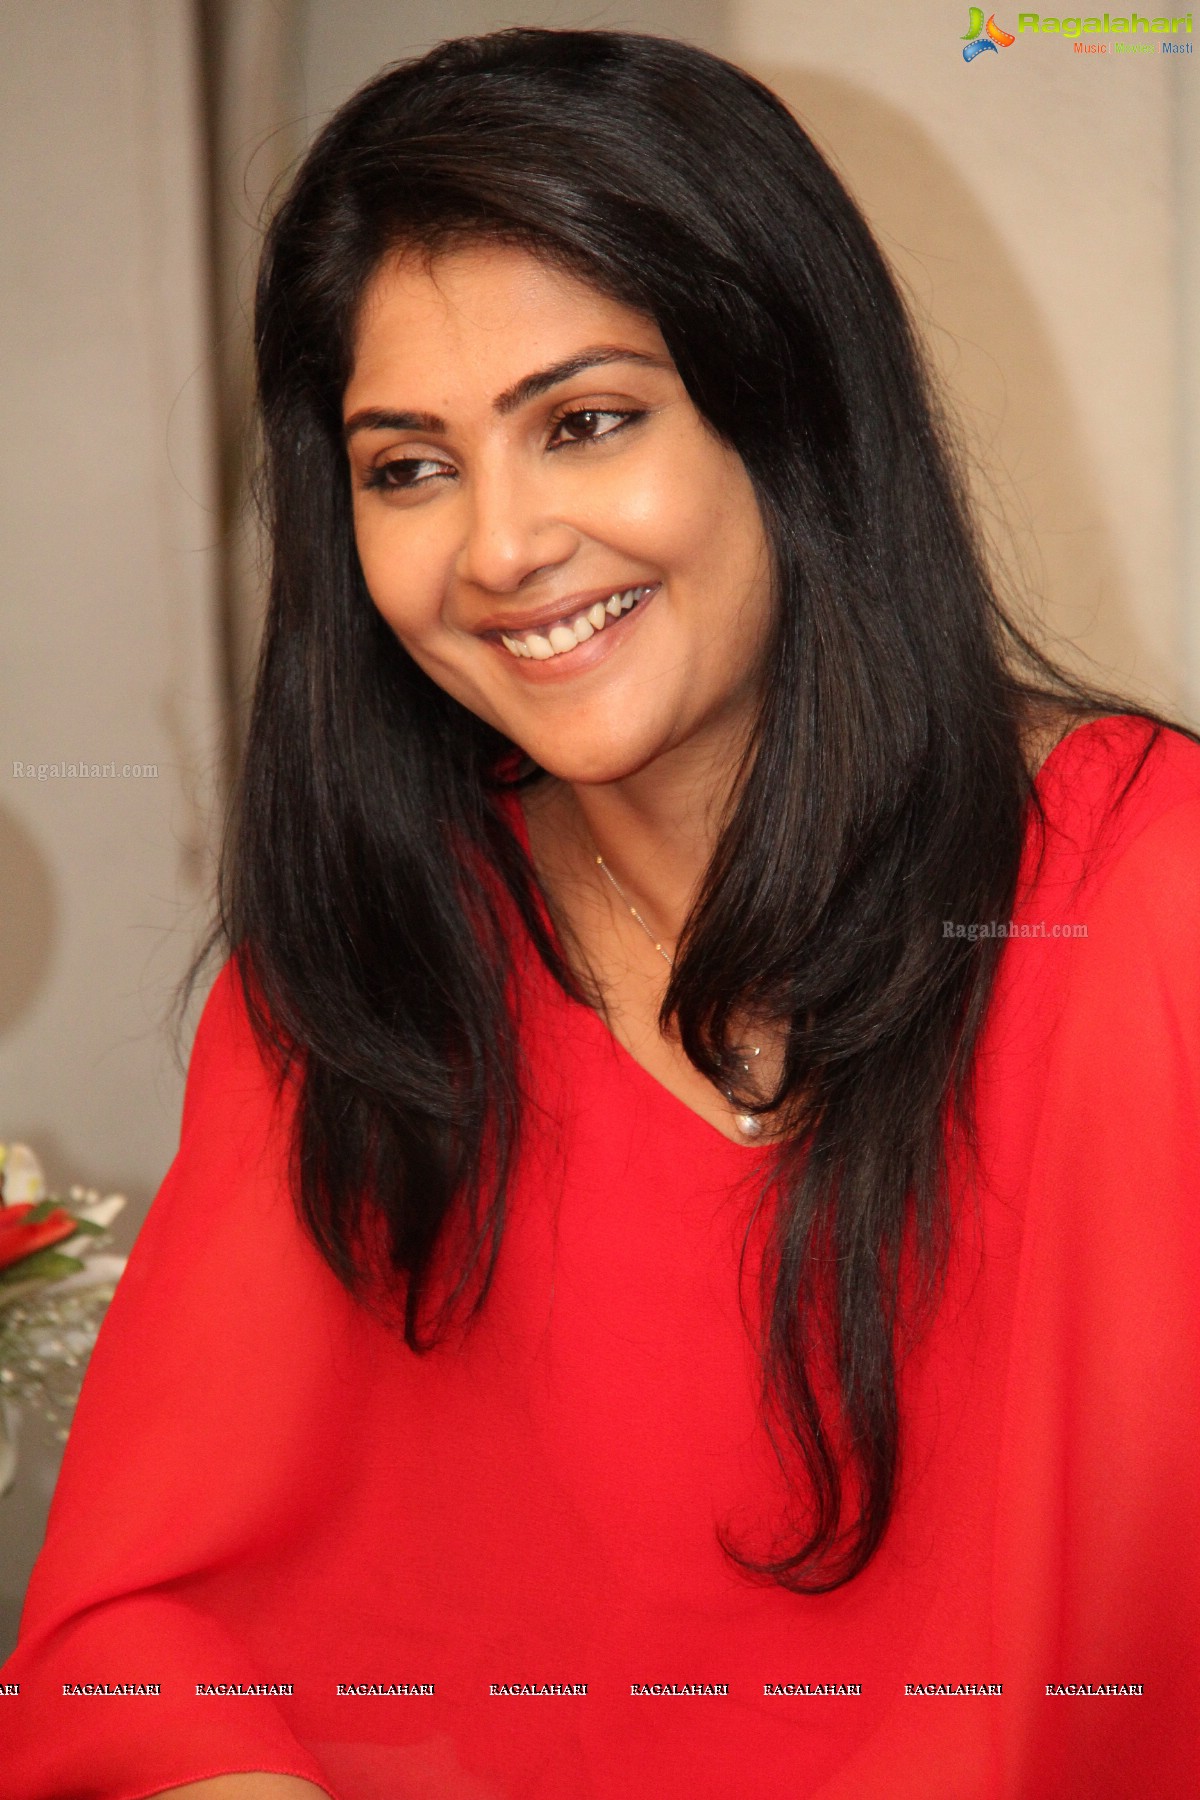 Kamalinee Mukherjee